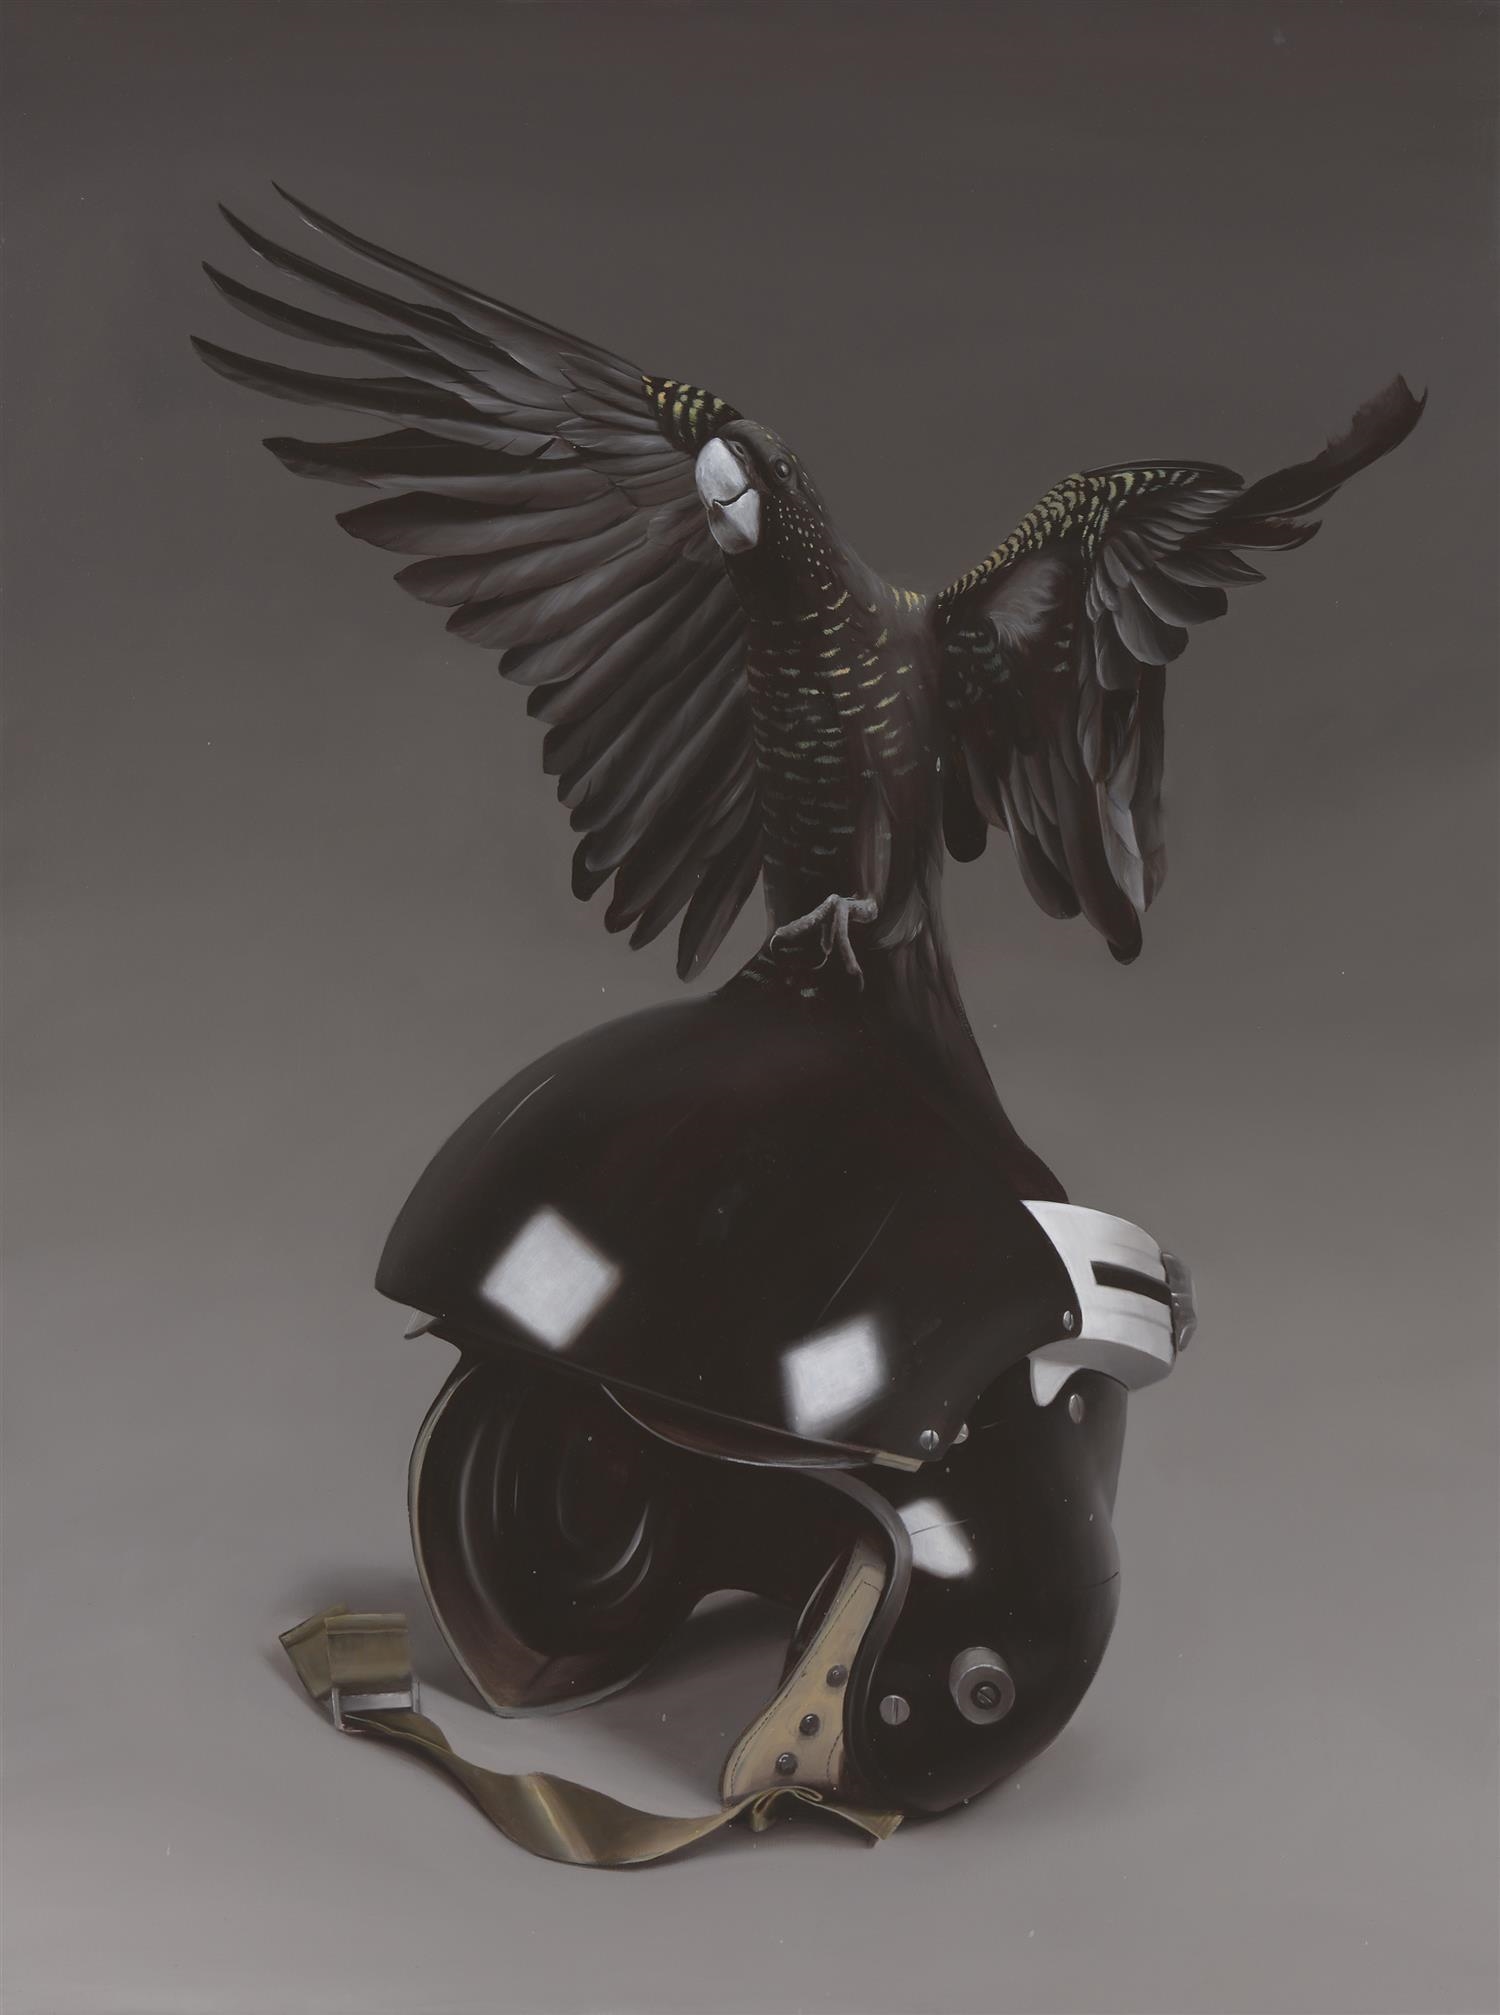 Black Cockatoo with Helmet 2019 by Sam Leach, 2019